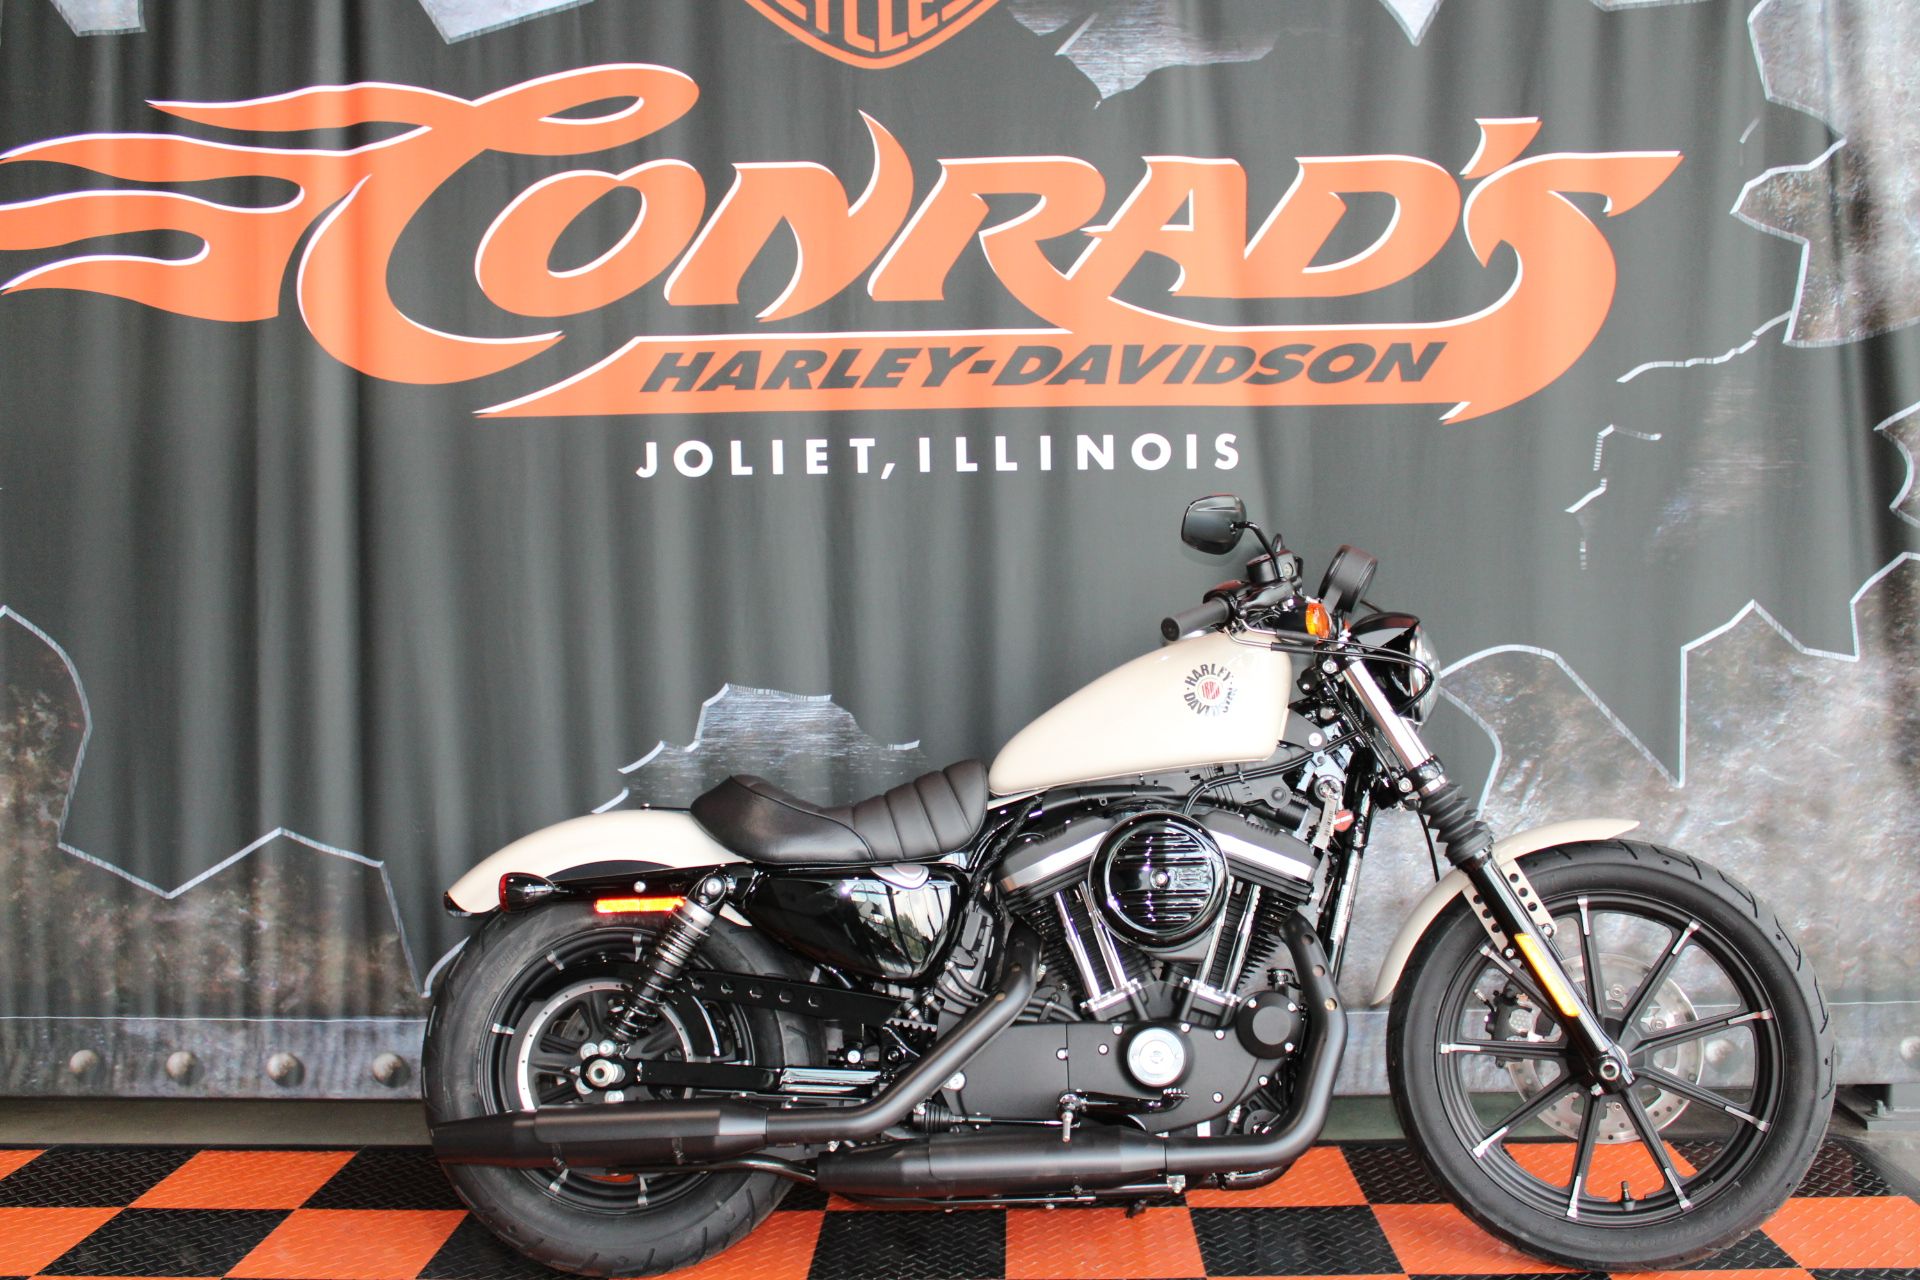 2022 Harley-Davidson Iron 883™ in Shorewood, Illinois - Photo 1